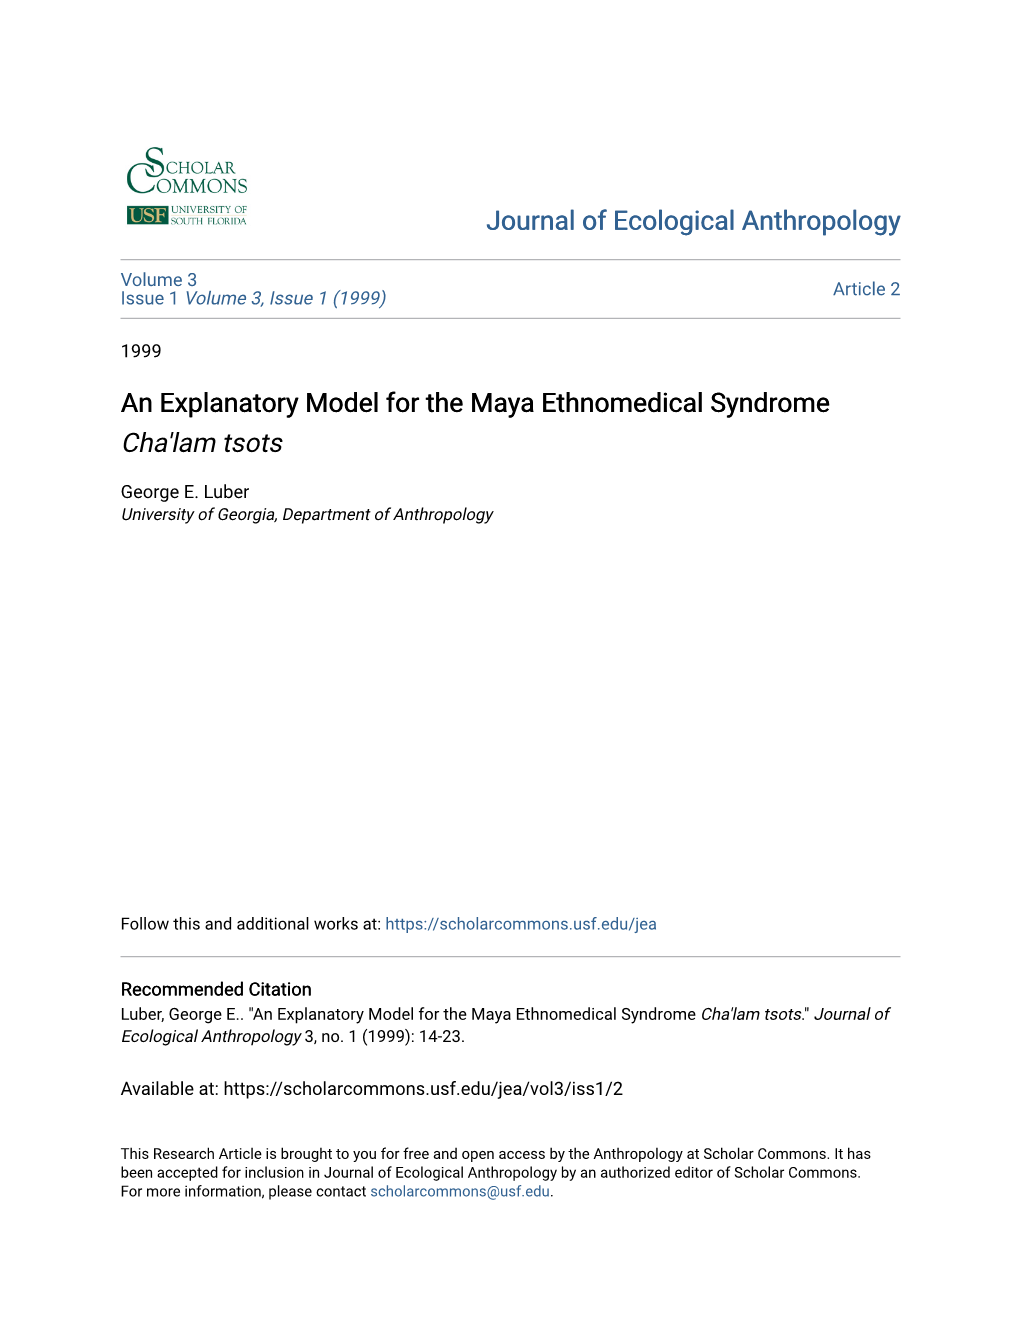 An Explanatory Model for the Maya Ethnomedical Syndrome Cha'lam Tsots